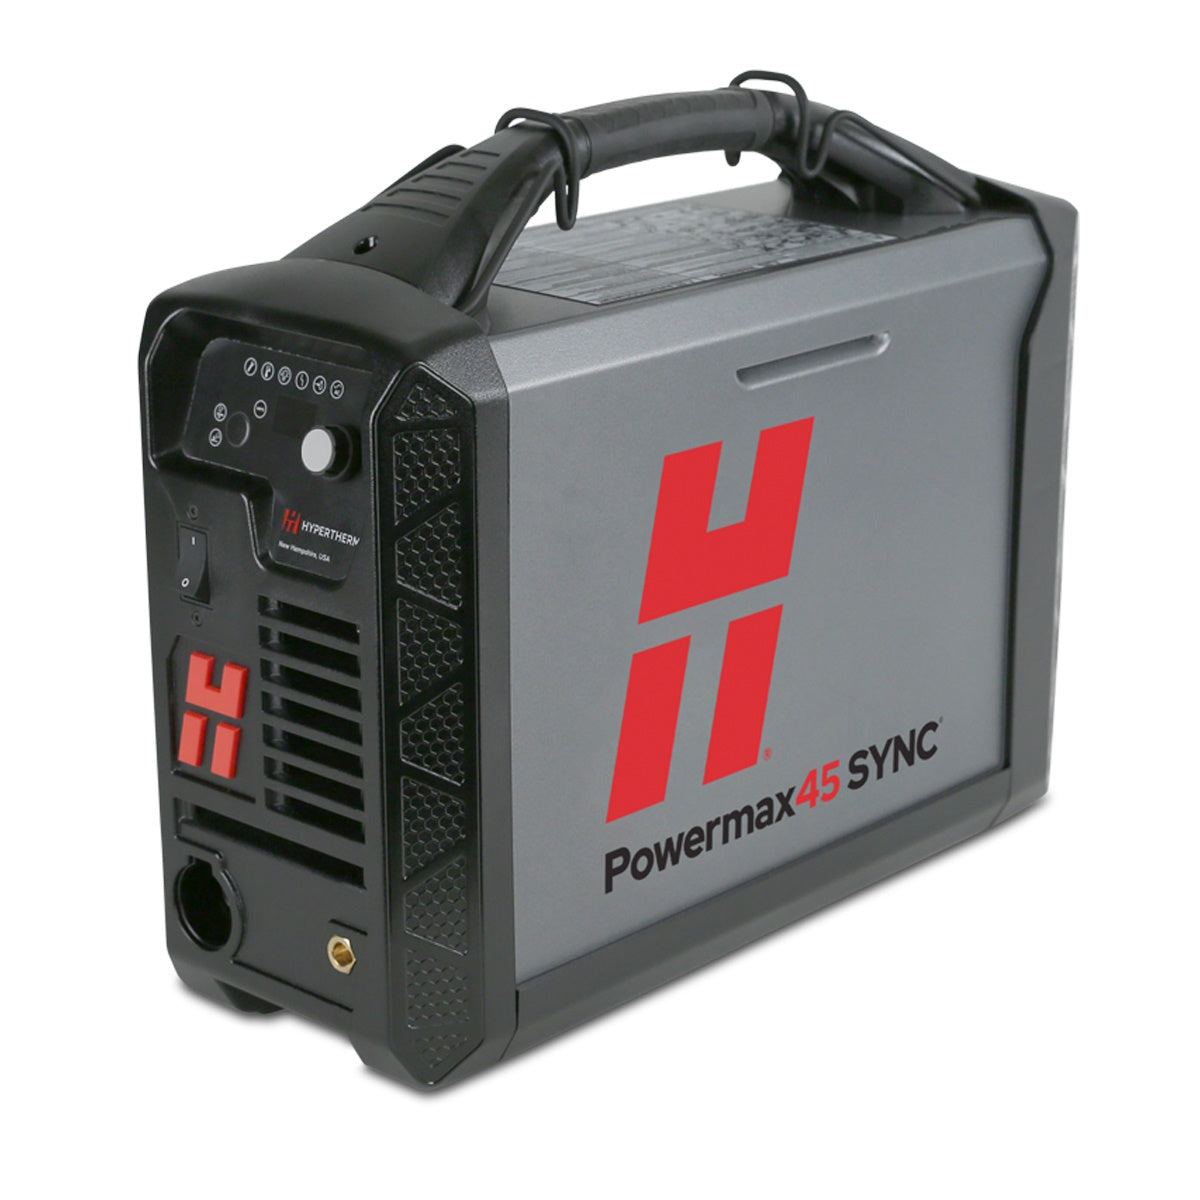 Hypertherm Powermax45 SYNC Plasma w/CPC and Serial Ports 25ft Mechanized Torch (088584)